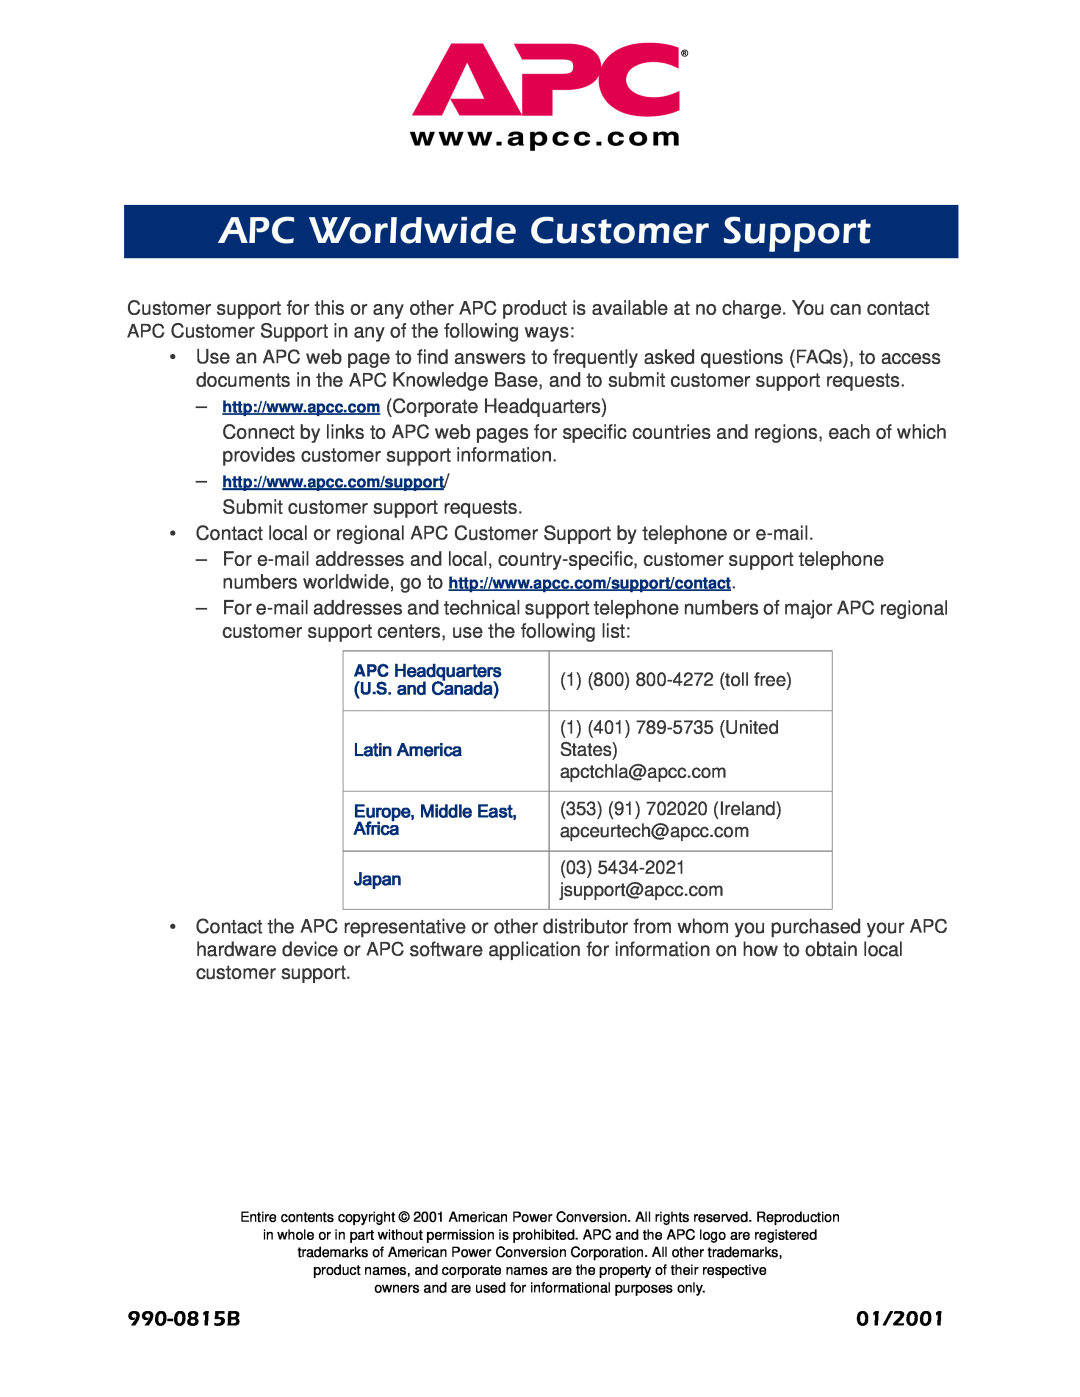 APC AP9312THi manual APC Worldwide Customer Support, 990-0815B, 01/2001 